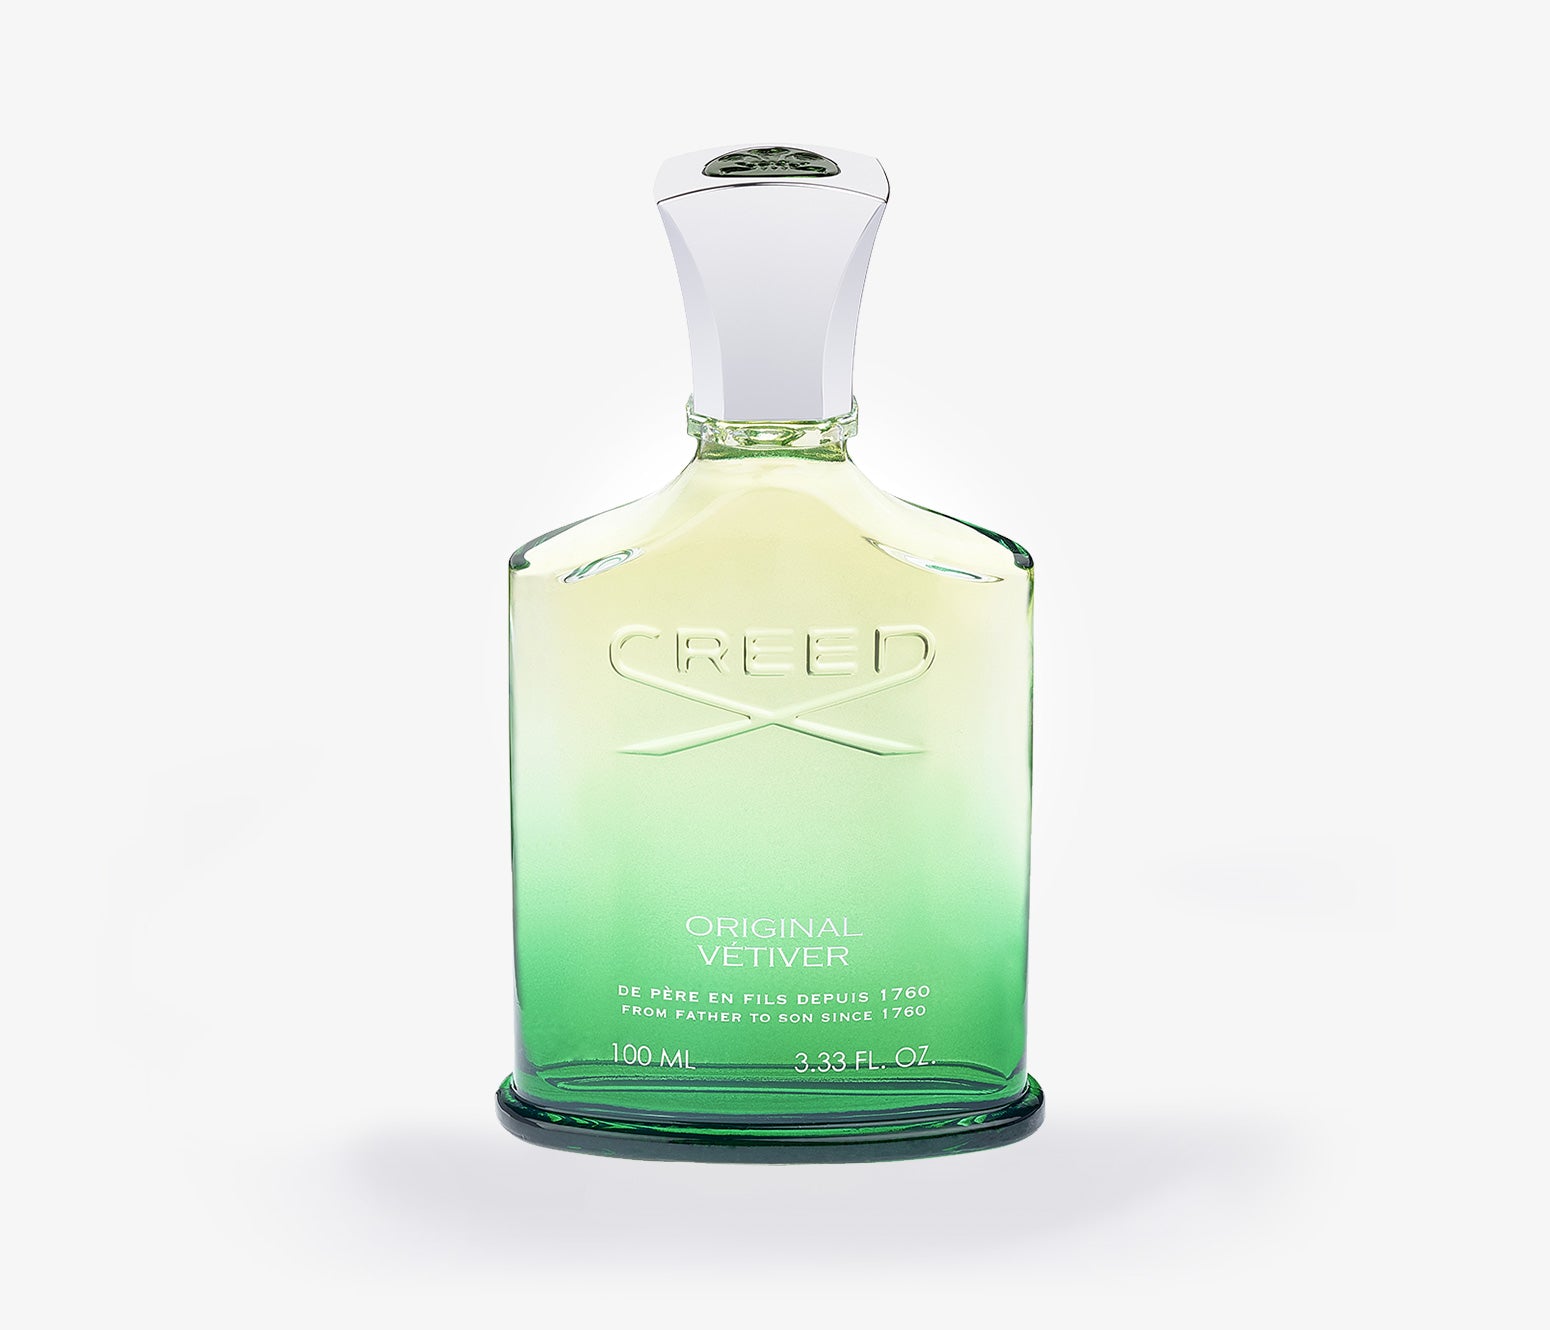 Creed - Original Vetiver - 50ml - IEP001 - Product Image - Fragrance - Les Senteurs